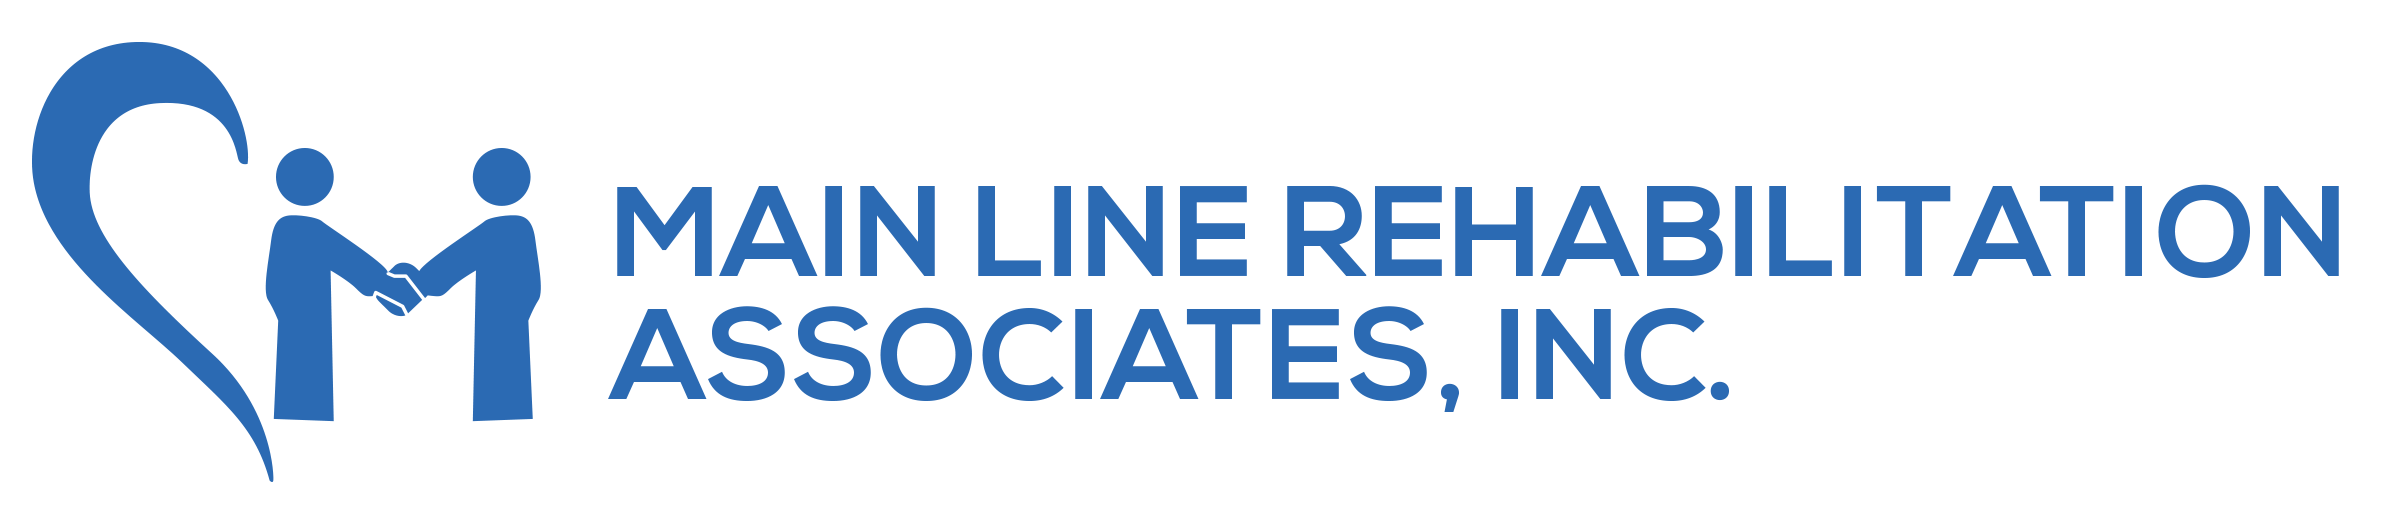 Main Line Rehabilitation Associates Company Logo